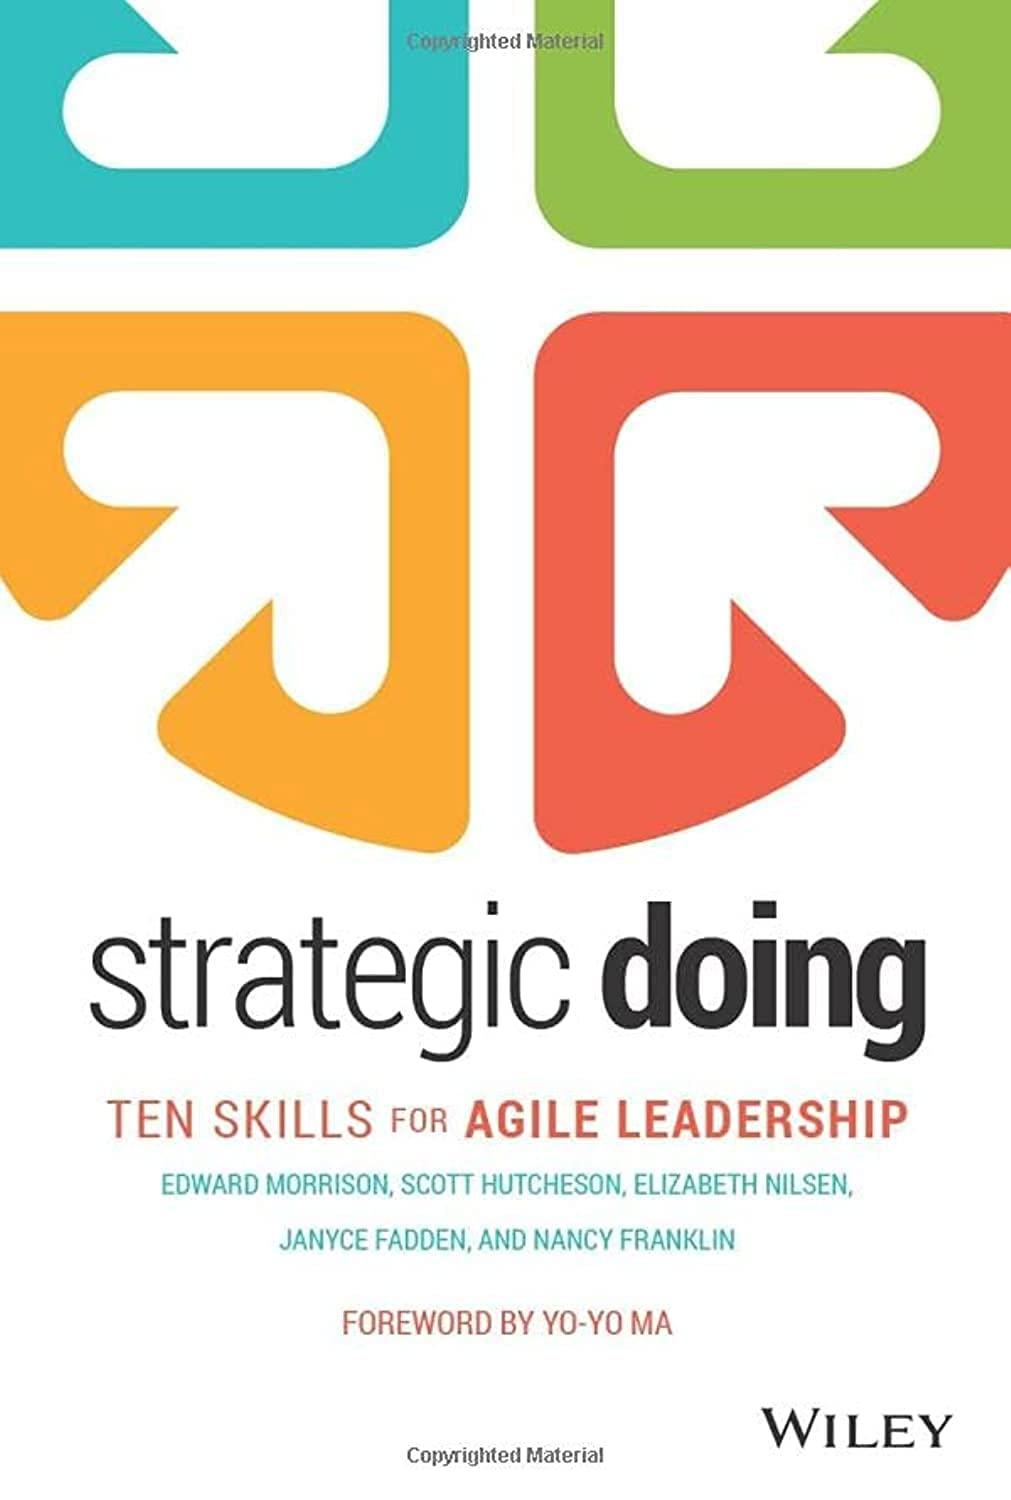 strategic doing ten skills for agile leadership 1st edition edward morrison, scott hutcheson, elizabeth